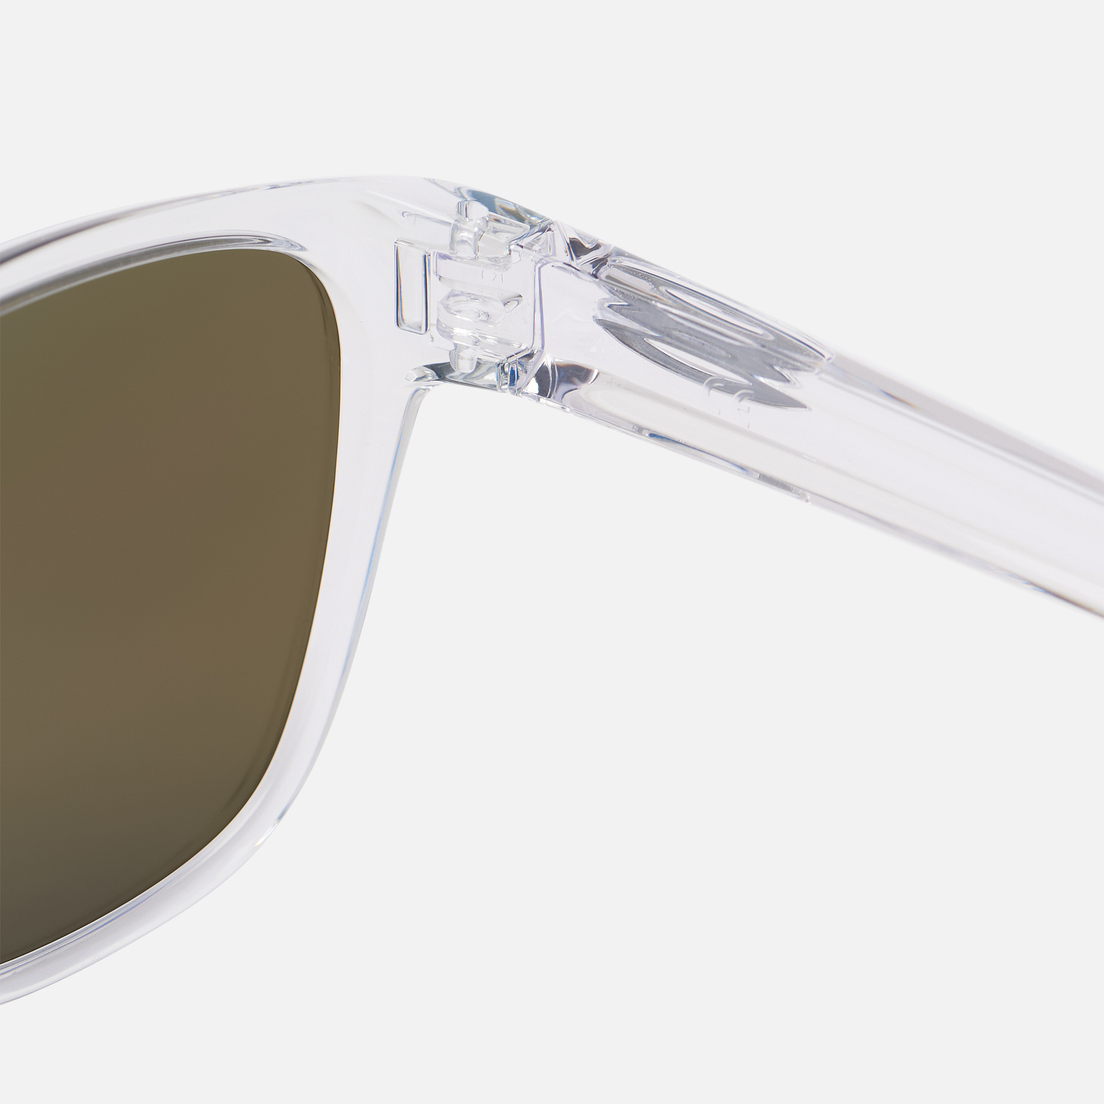 Oakley Солнцезащитные очки Manorburn